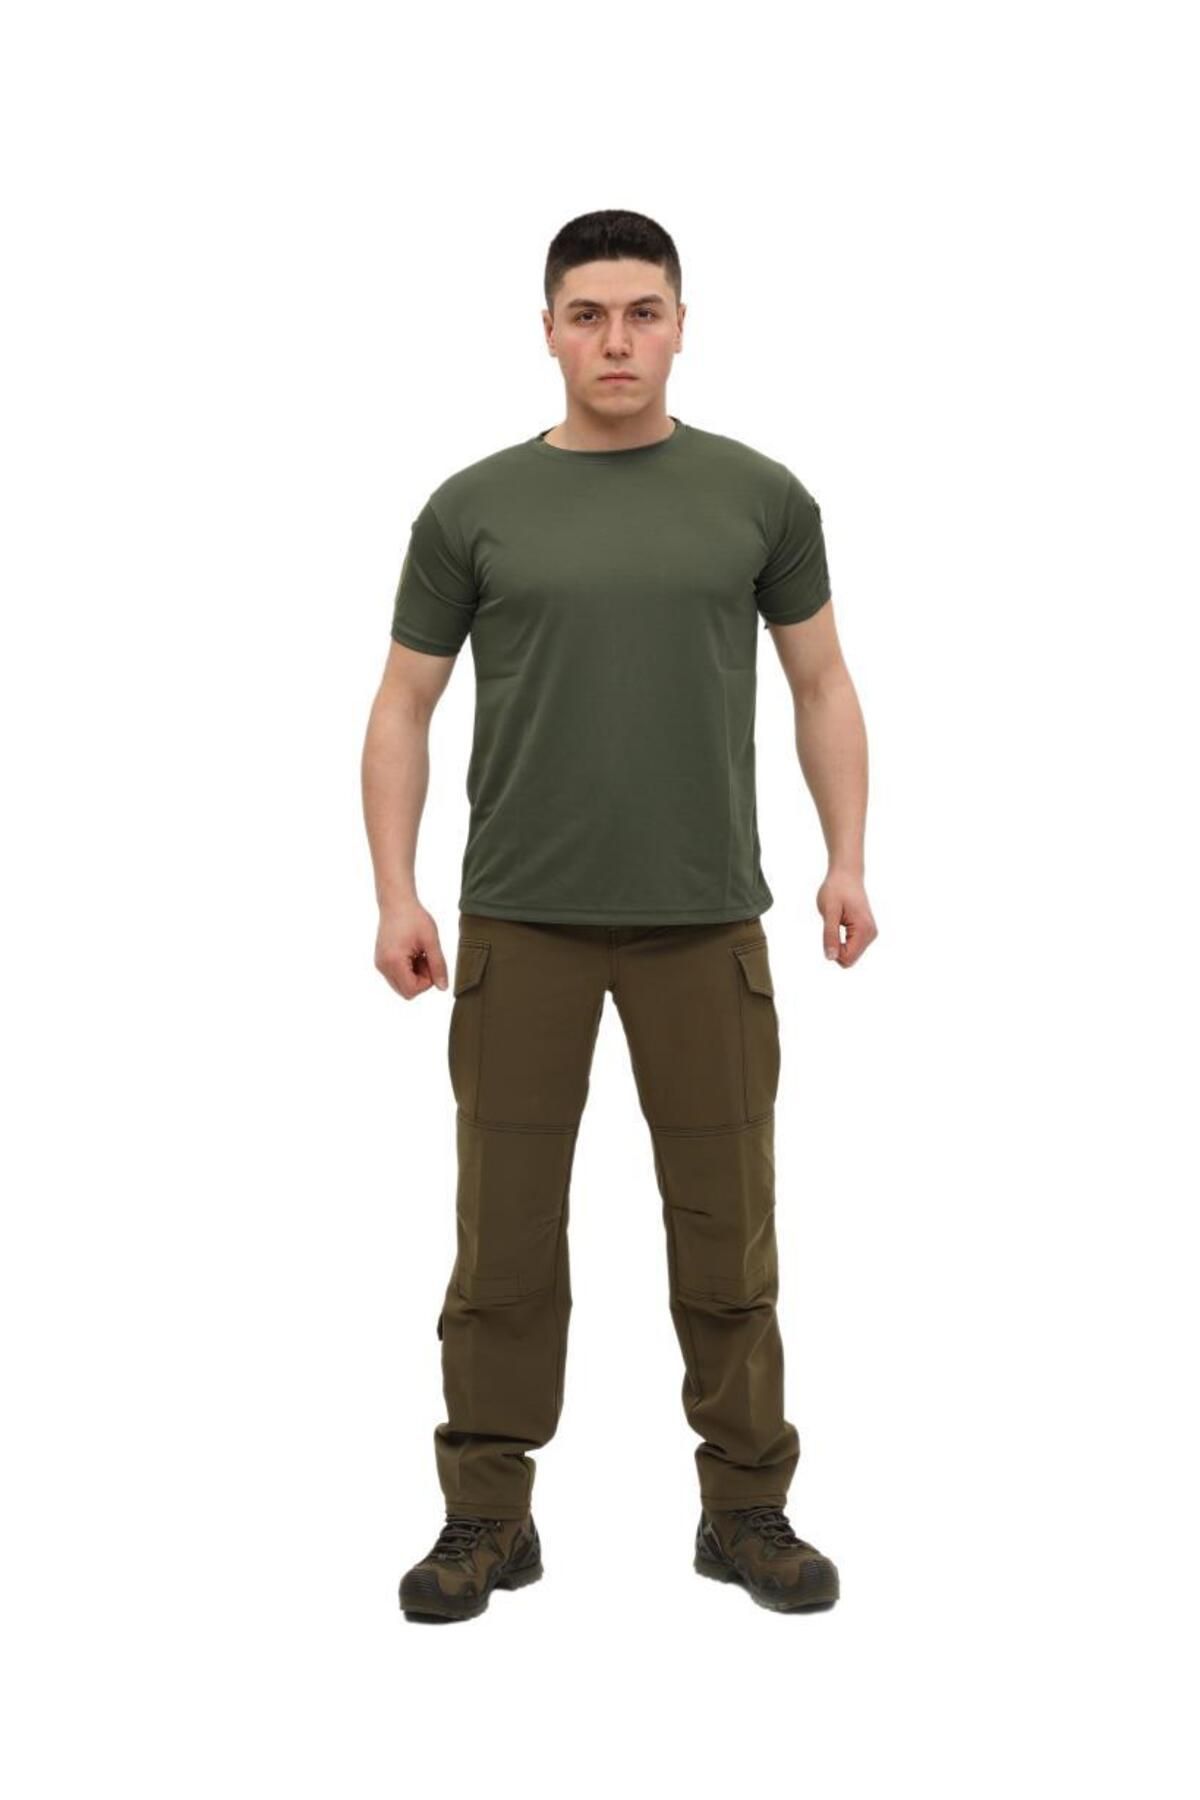 SİNGLE SWORD Yakasız Kısa Kol Tactical T-shirt - Tişört